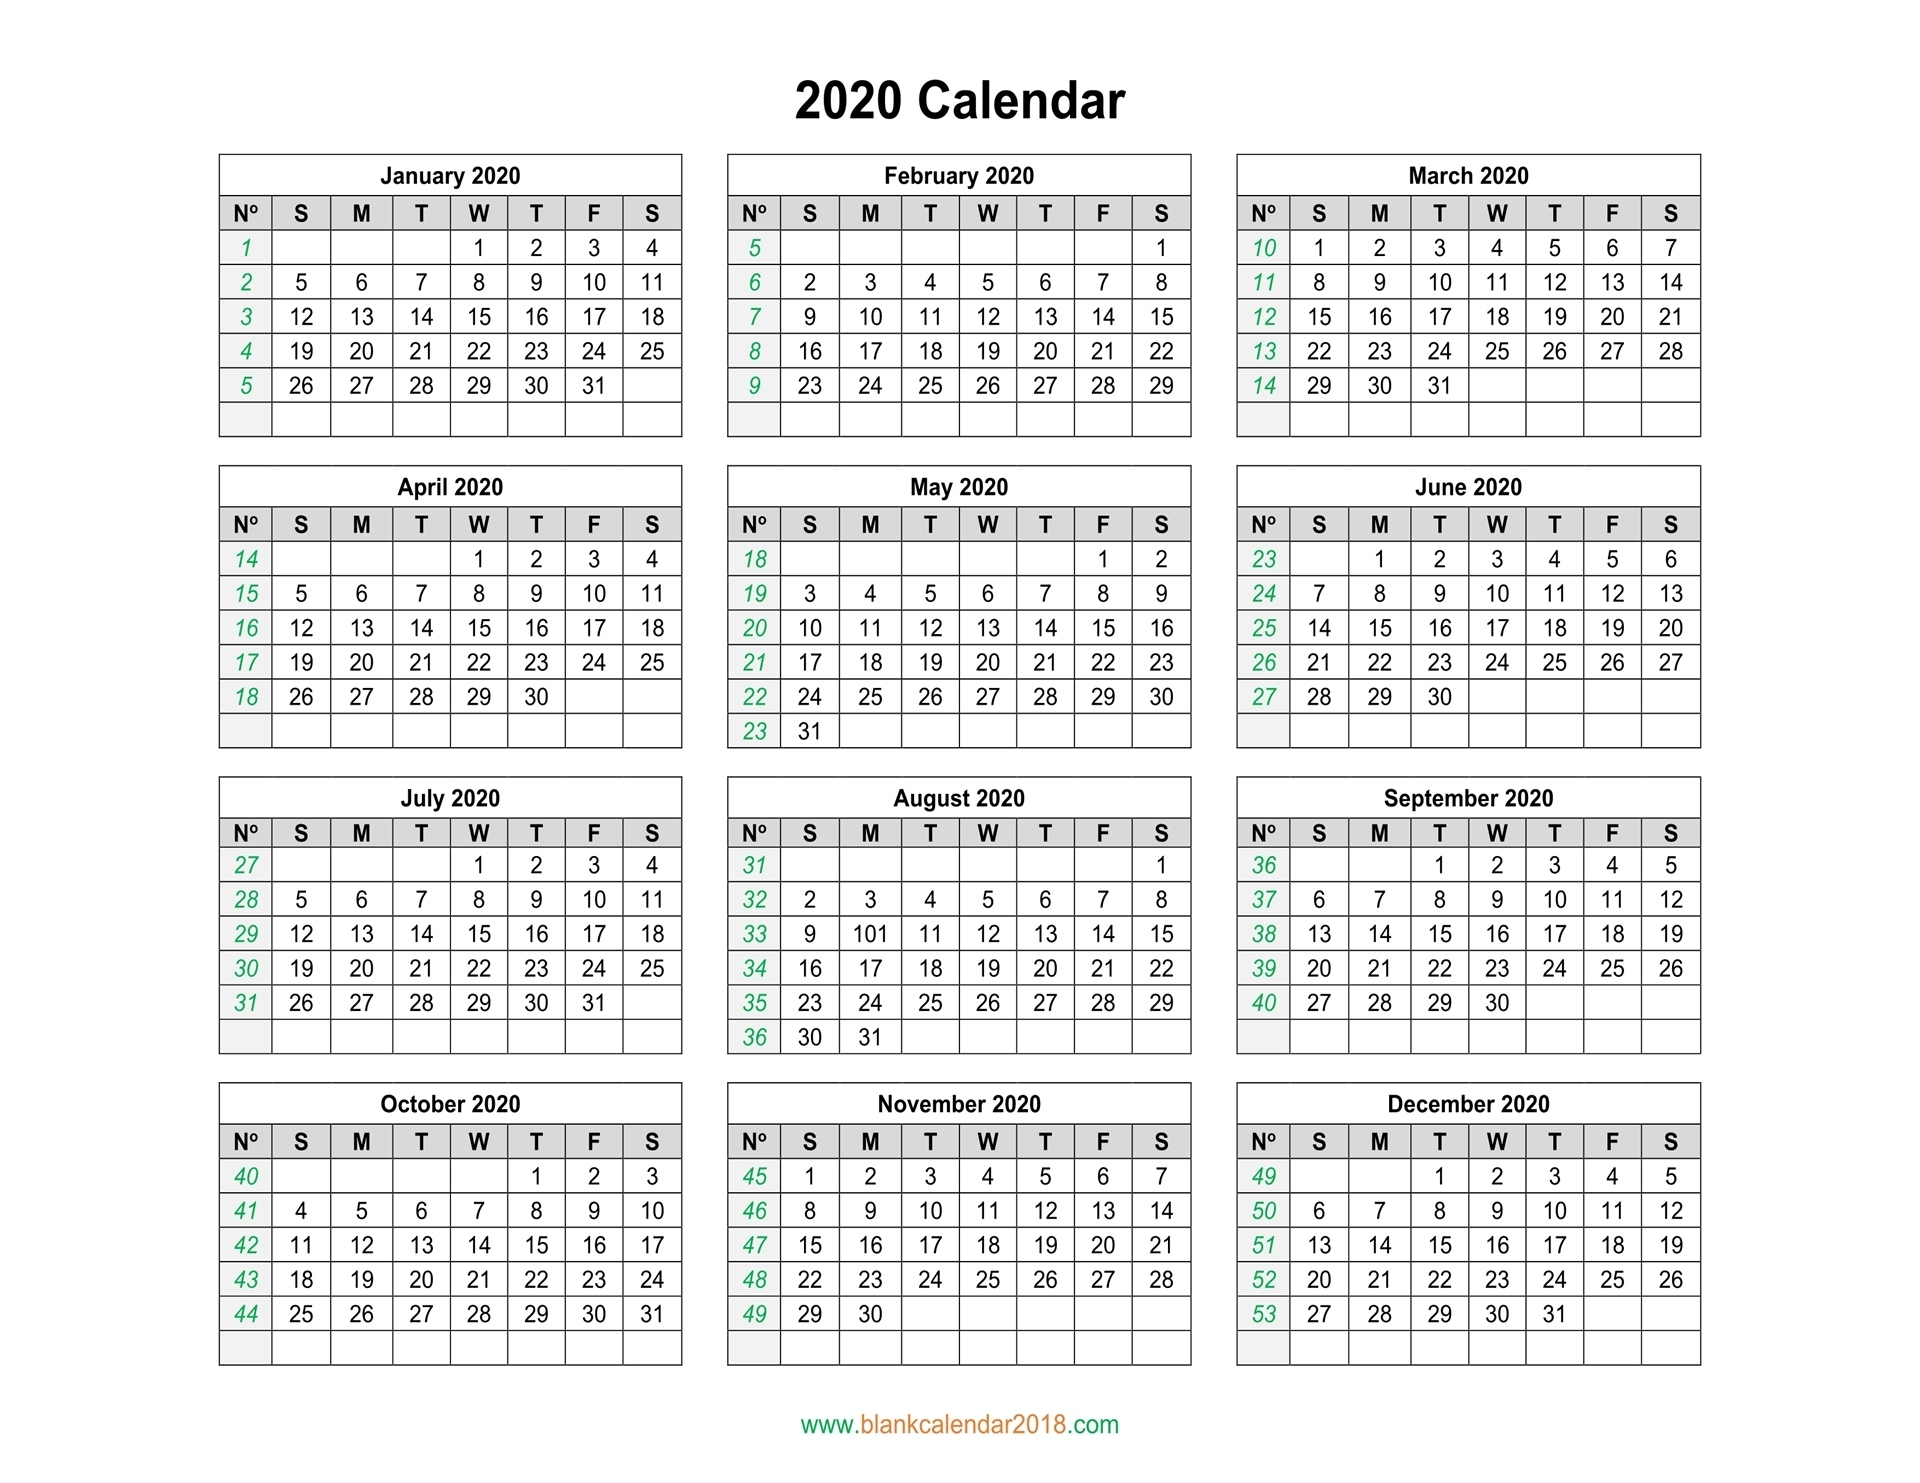 Blank Calendar 2020 Calendar With Days Numbered 2020